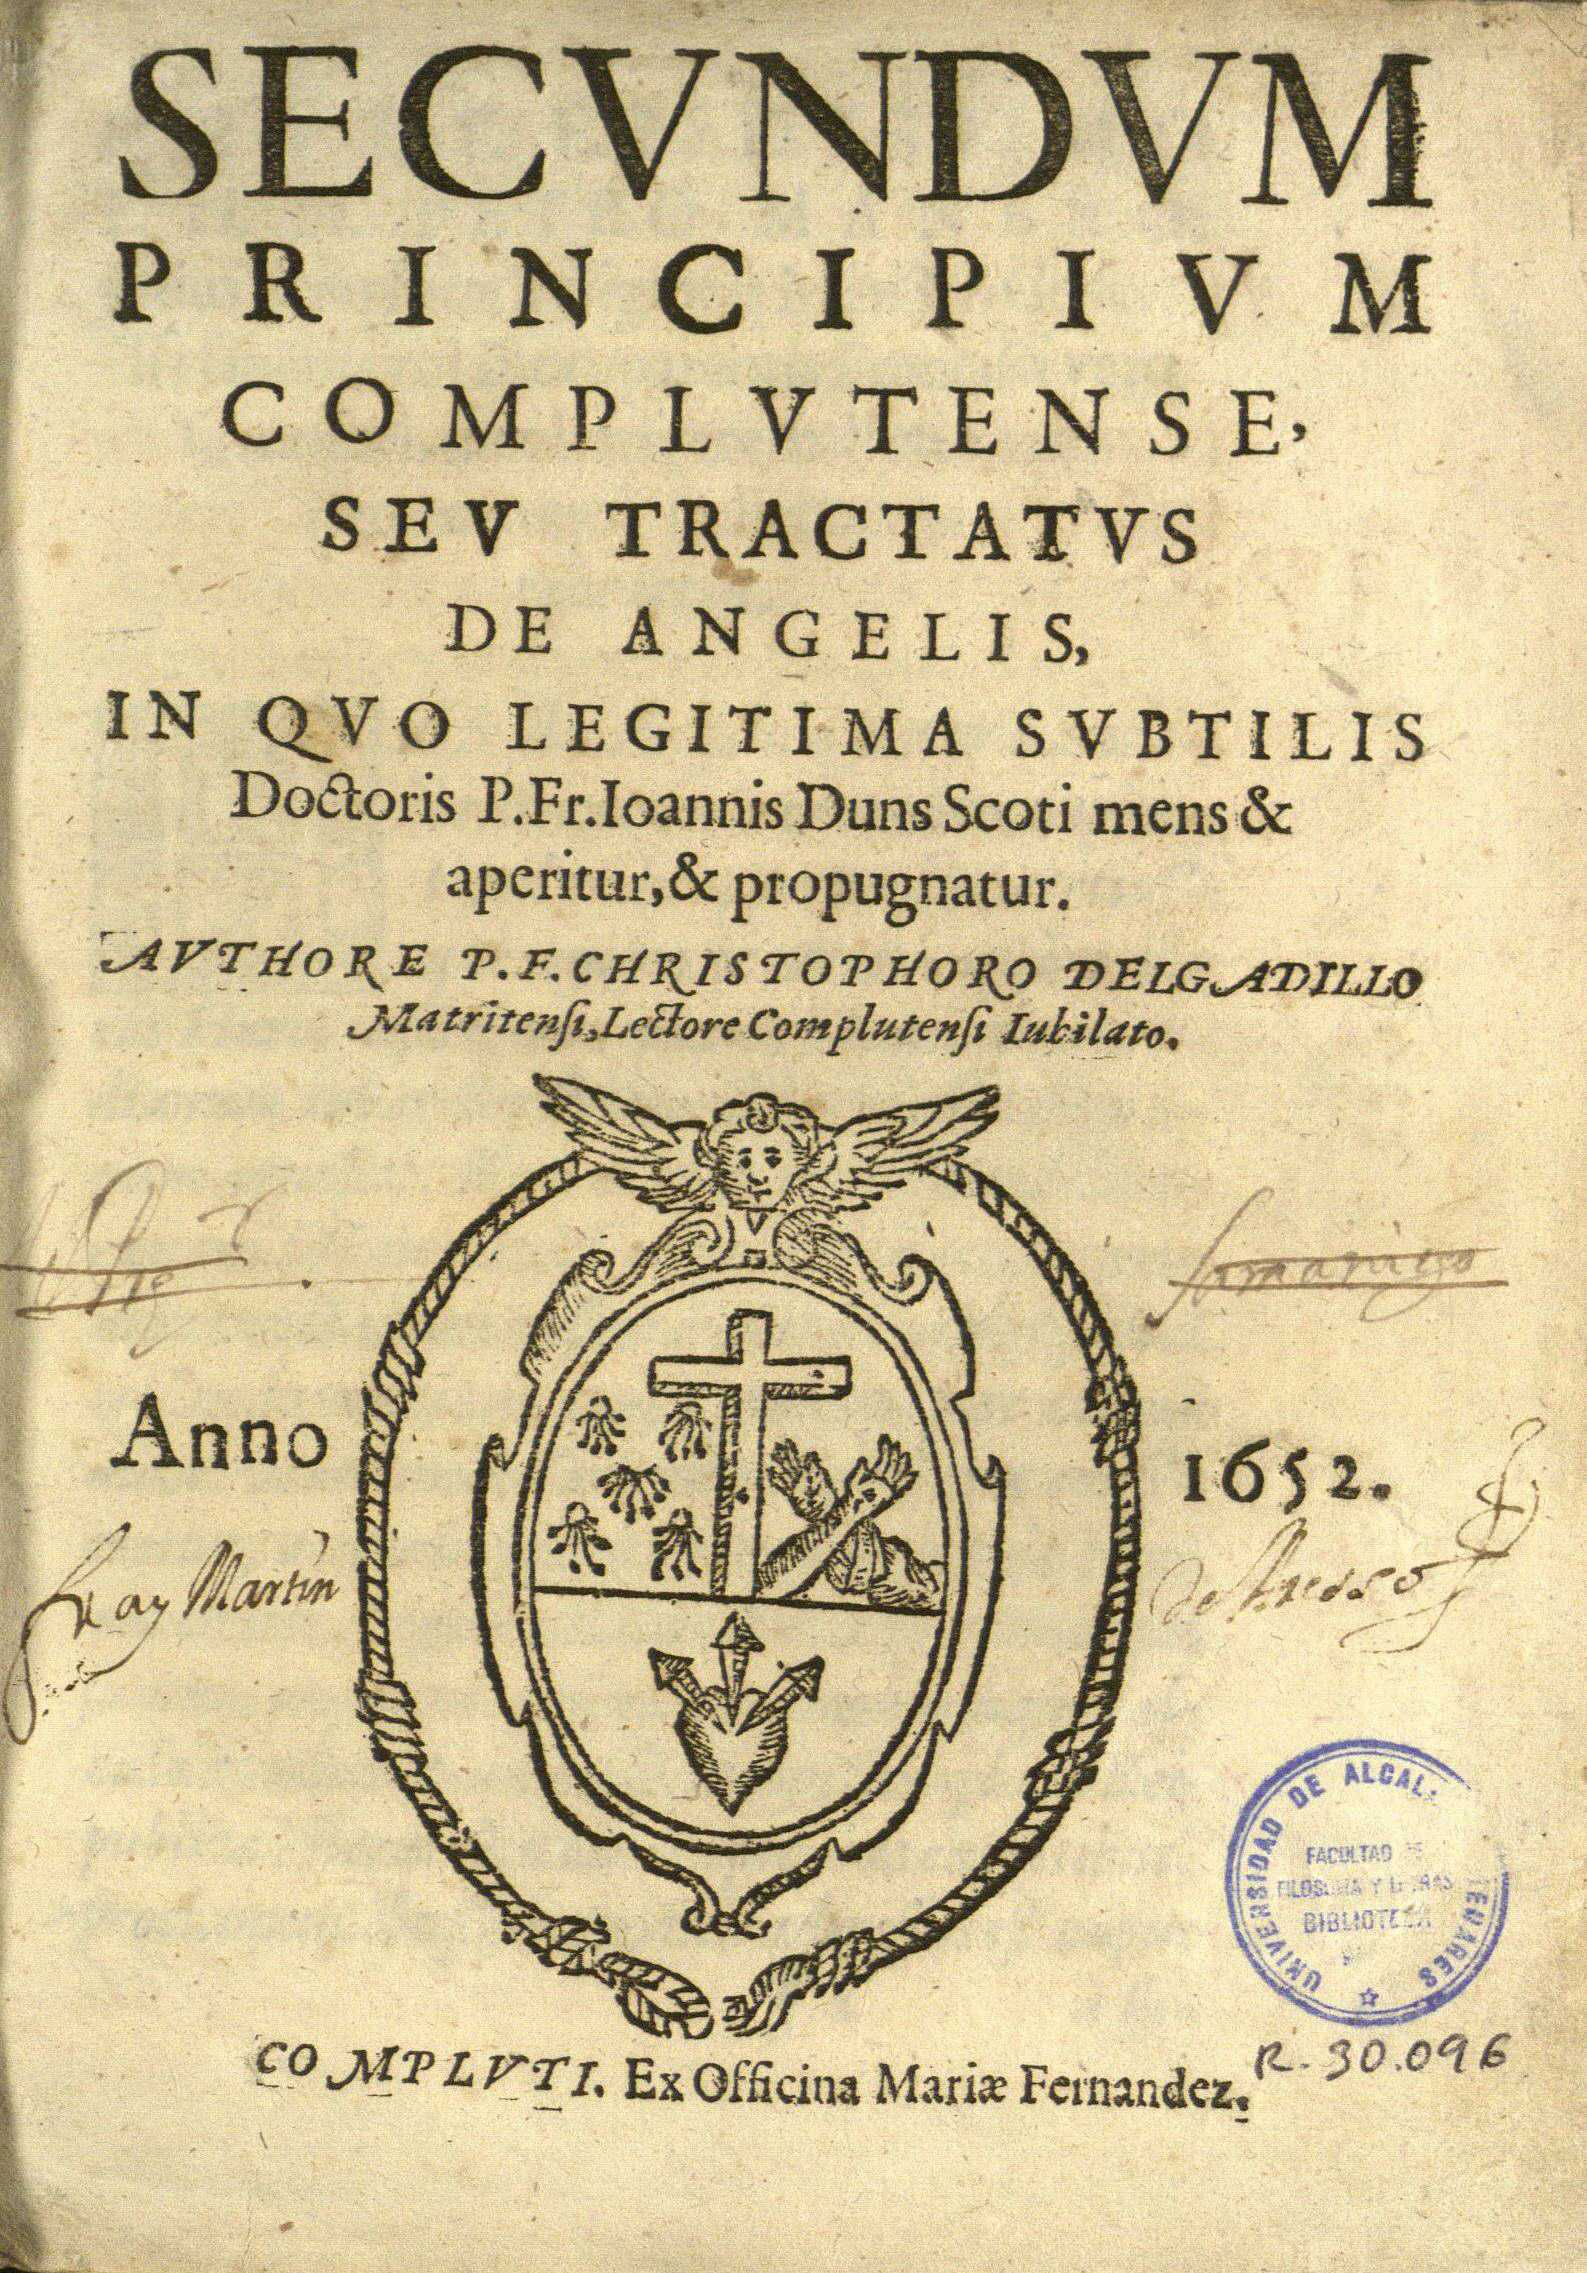 Secundum principium complutense seu Tractatus de angelis, 1652